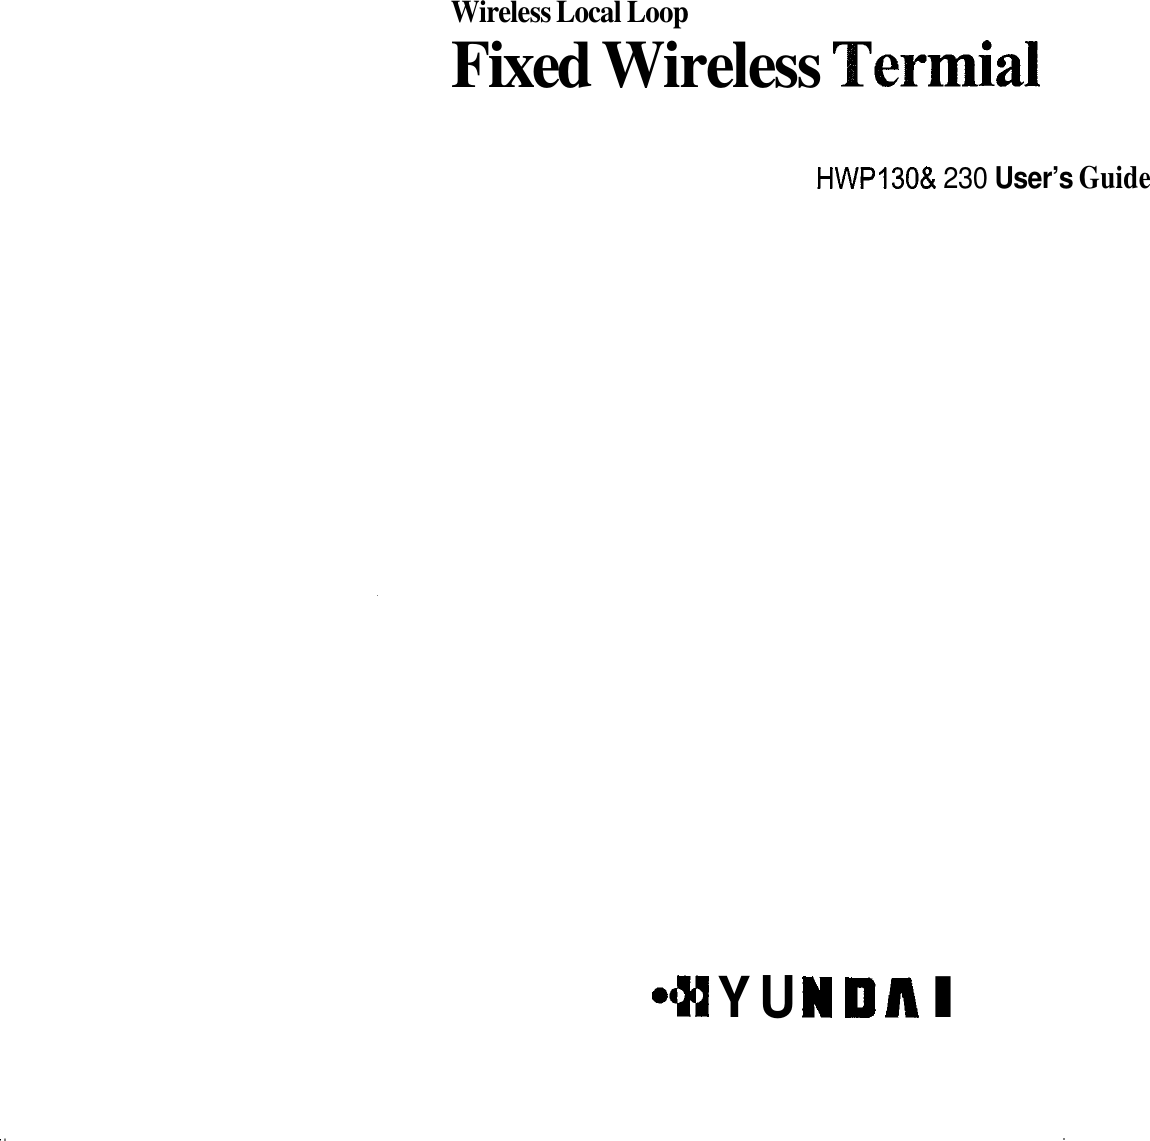 Wireless Local Loop Fixed Wireless HWPl30&amp; 230 User’s Guide 4 Y U W D A I 